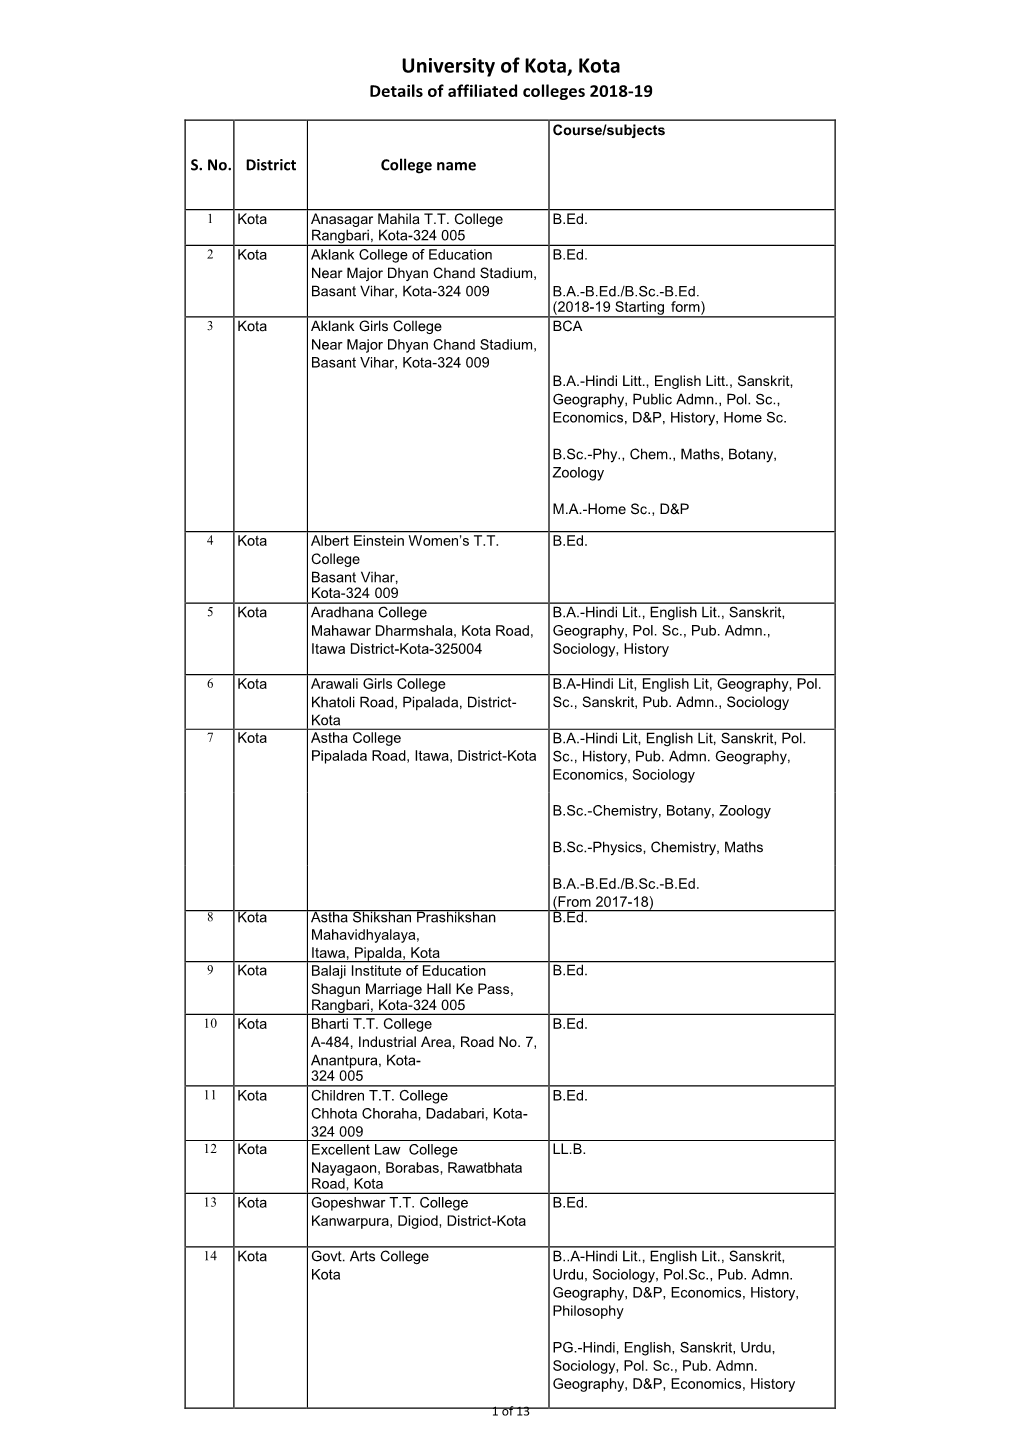 University of Kota, Kota Details of Affiliated Colleges 2018-19